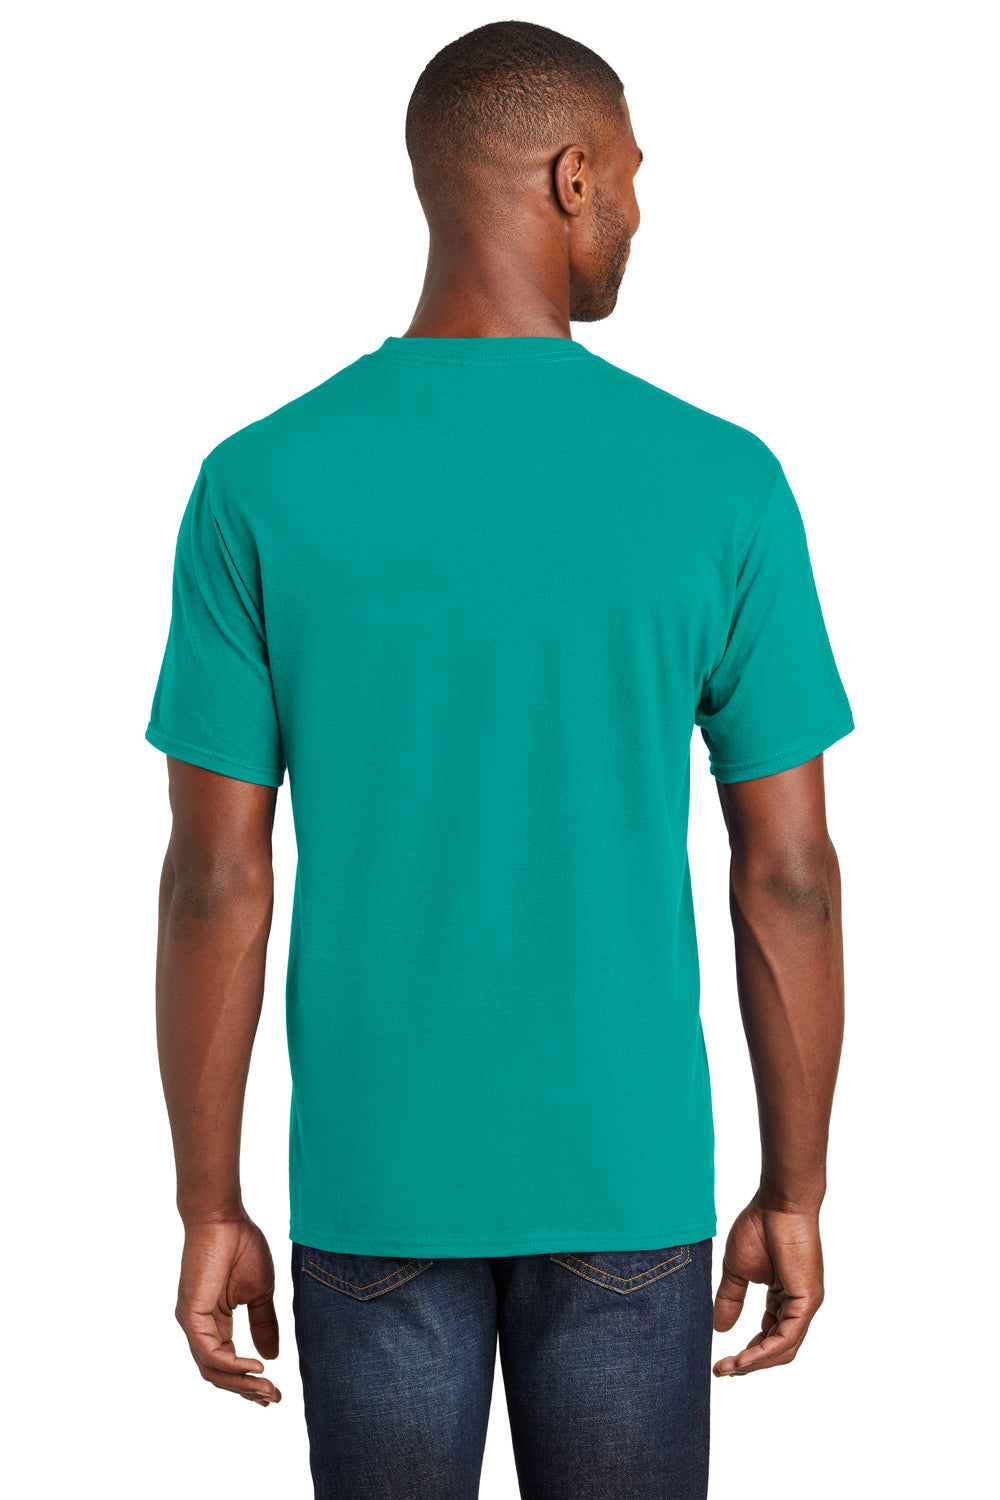 Port & Company PC450 Mens Fan Favorite Short Sleeve Crewneck T-Shirt Teal Green Back